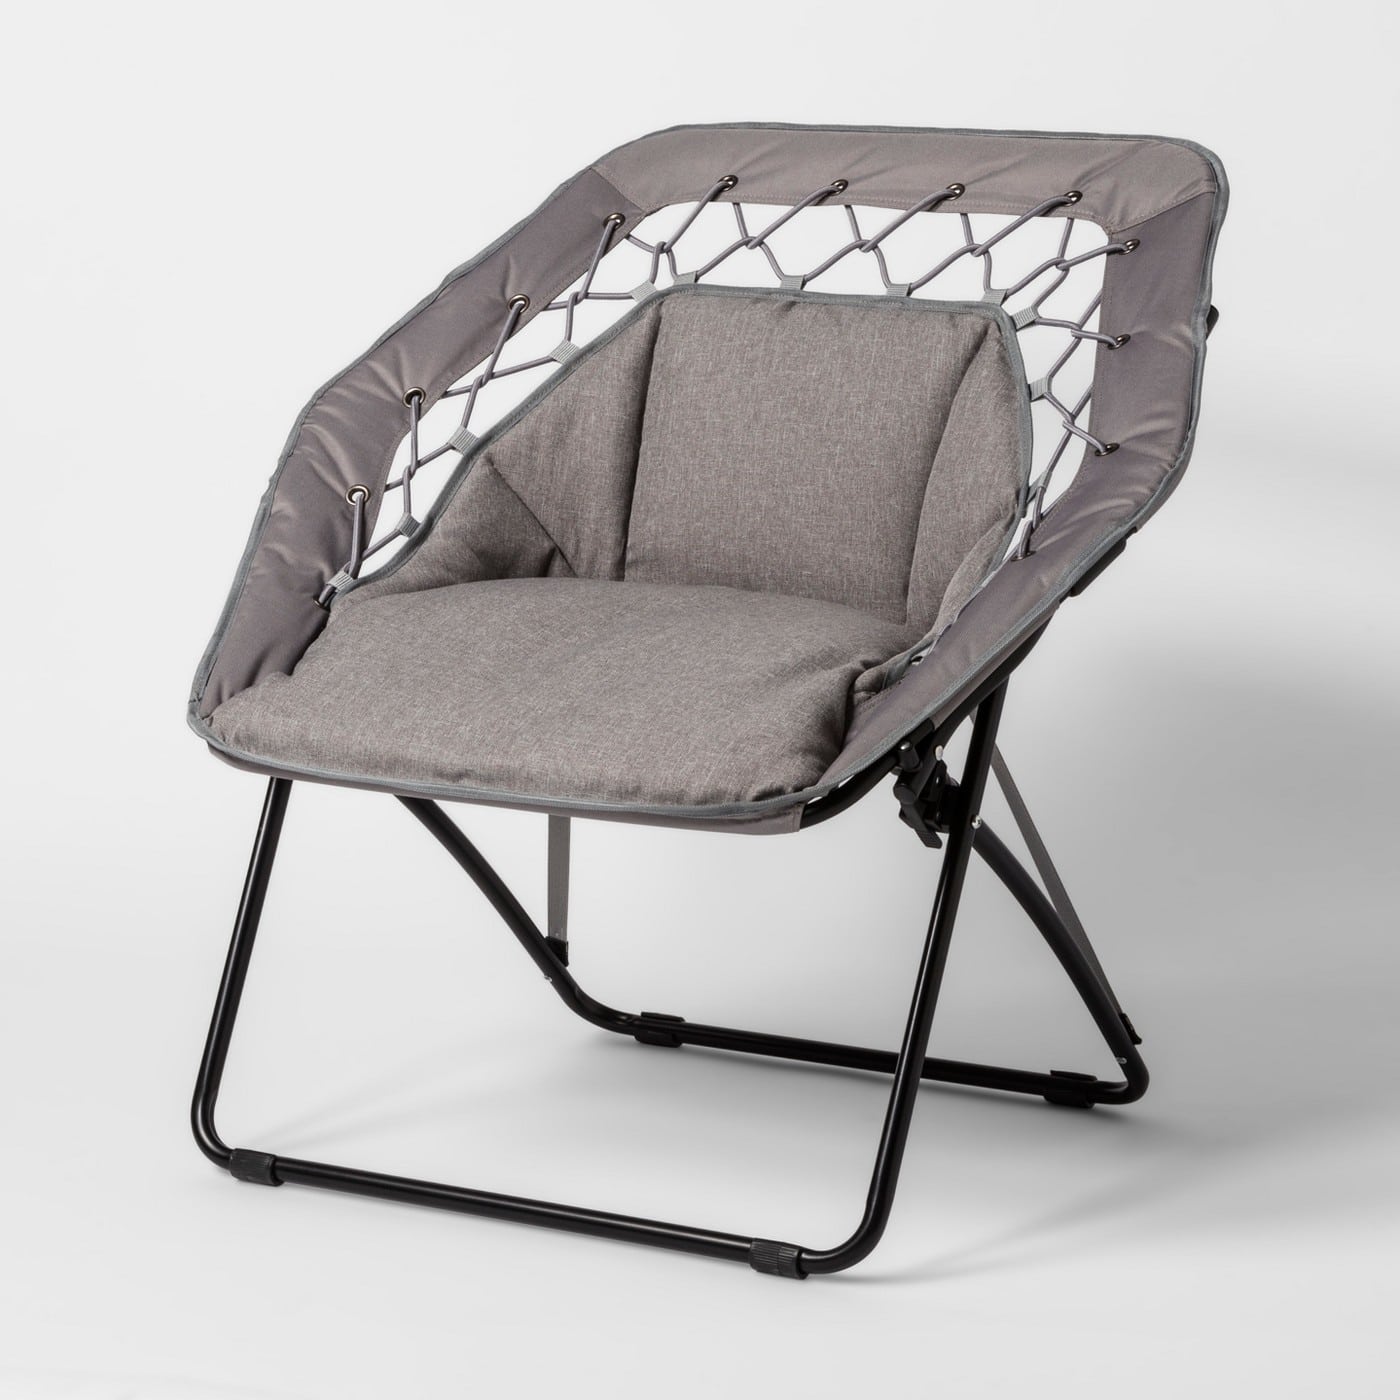 target double hexagon chair